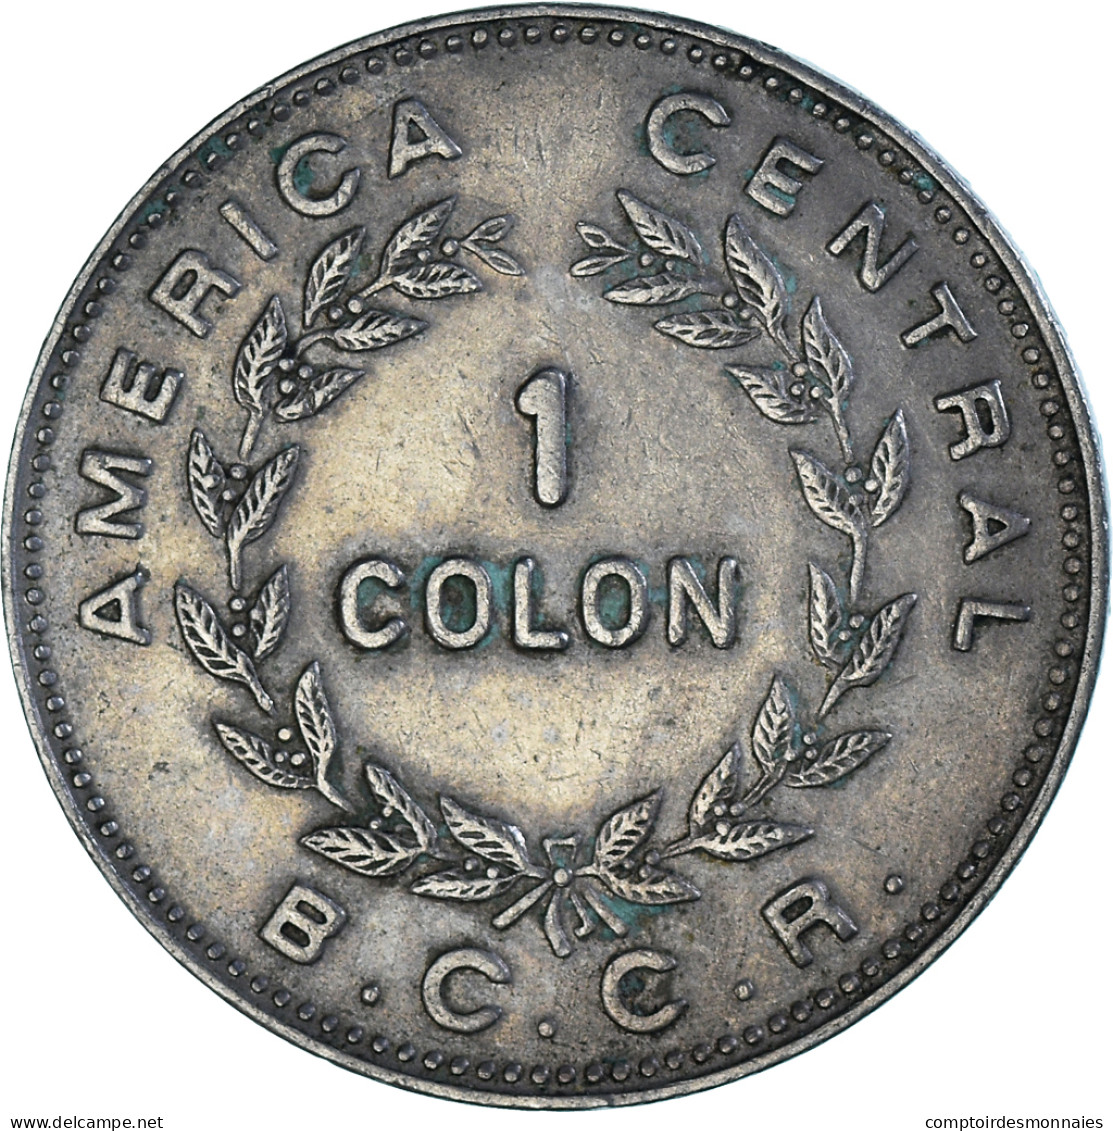 Monnaie, Costa Rica, Colon, 1975 - Costa Rica